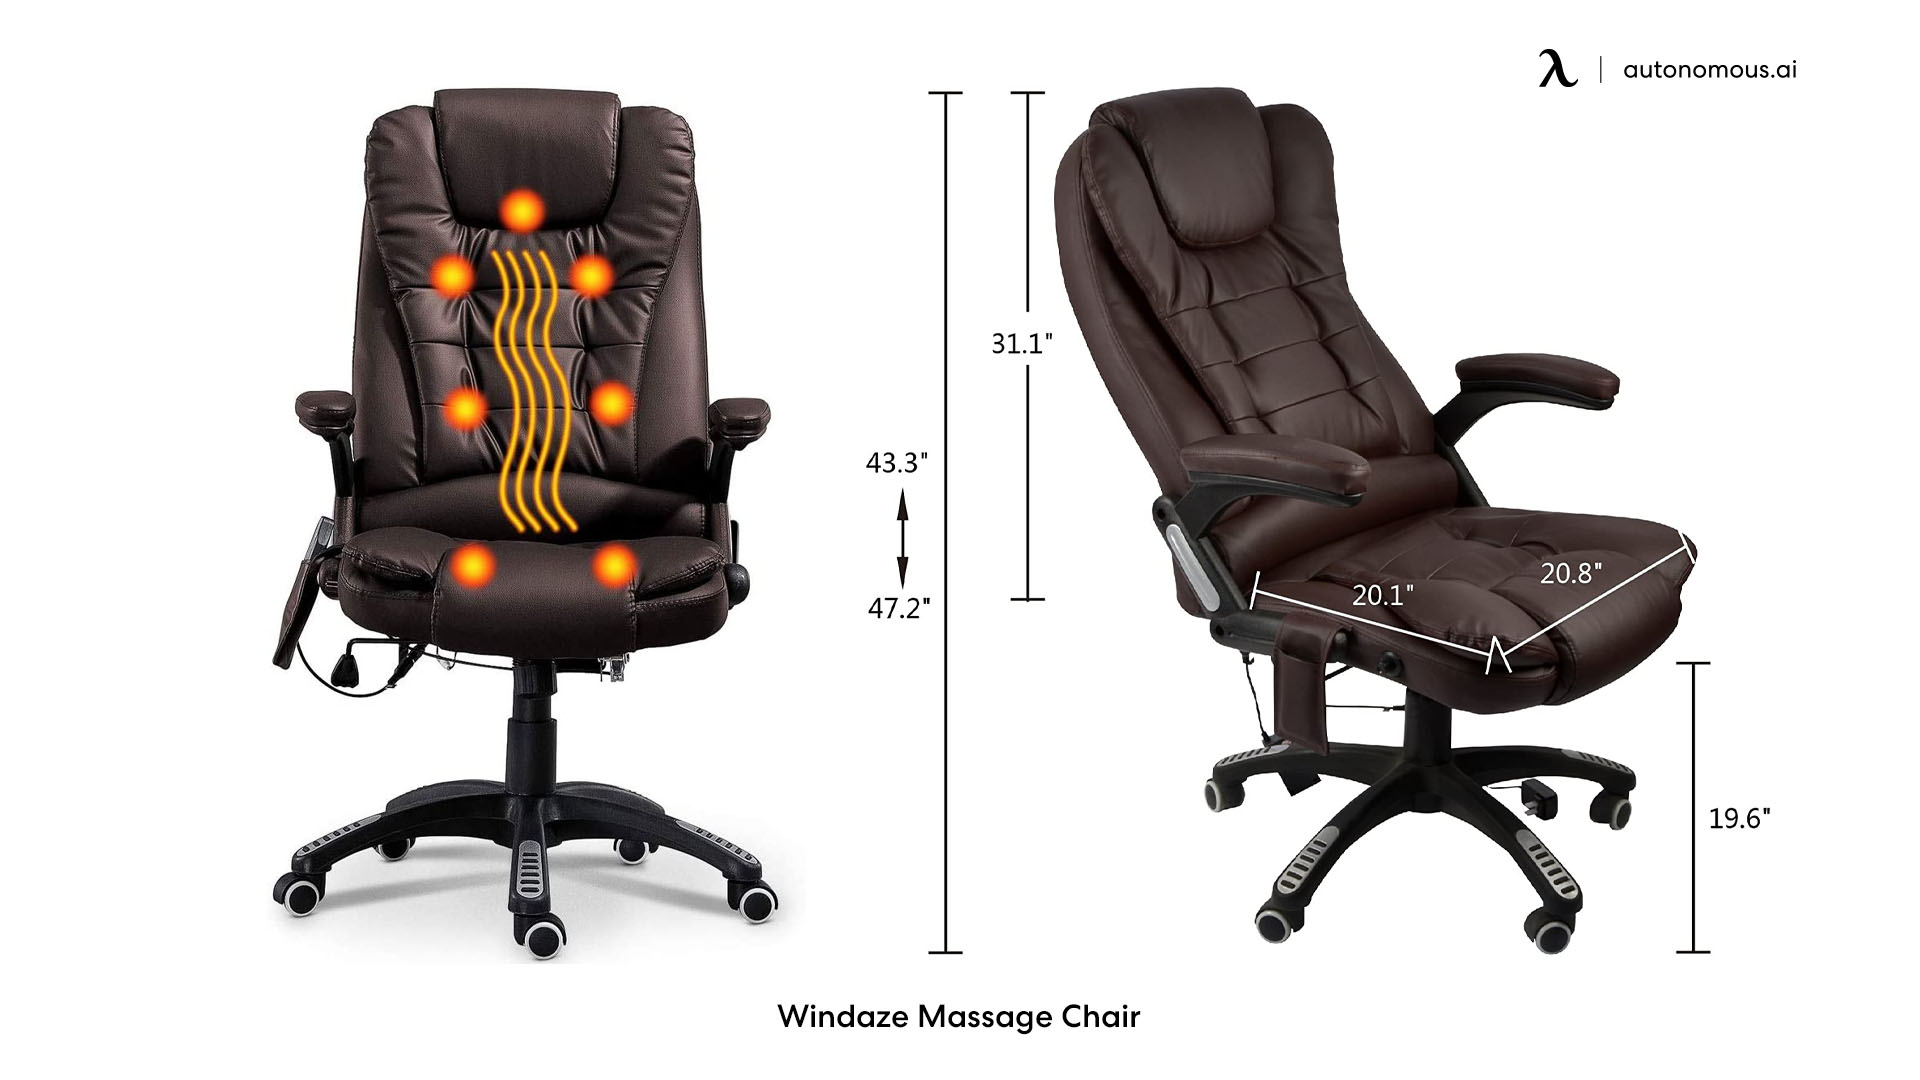 Windoze Massage Chair